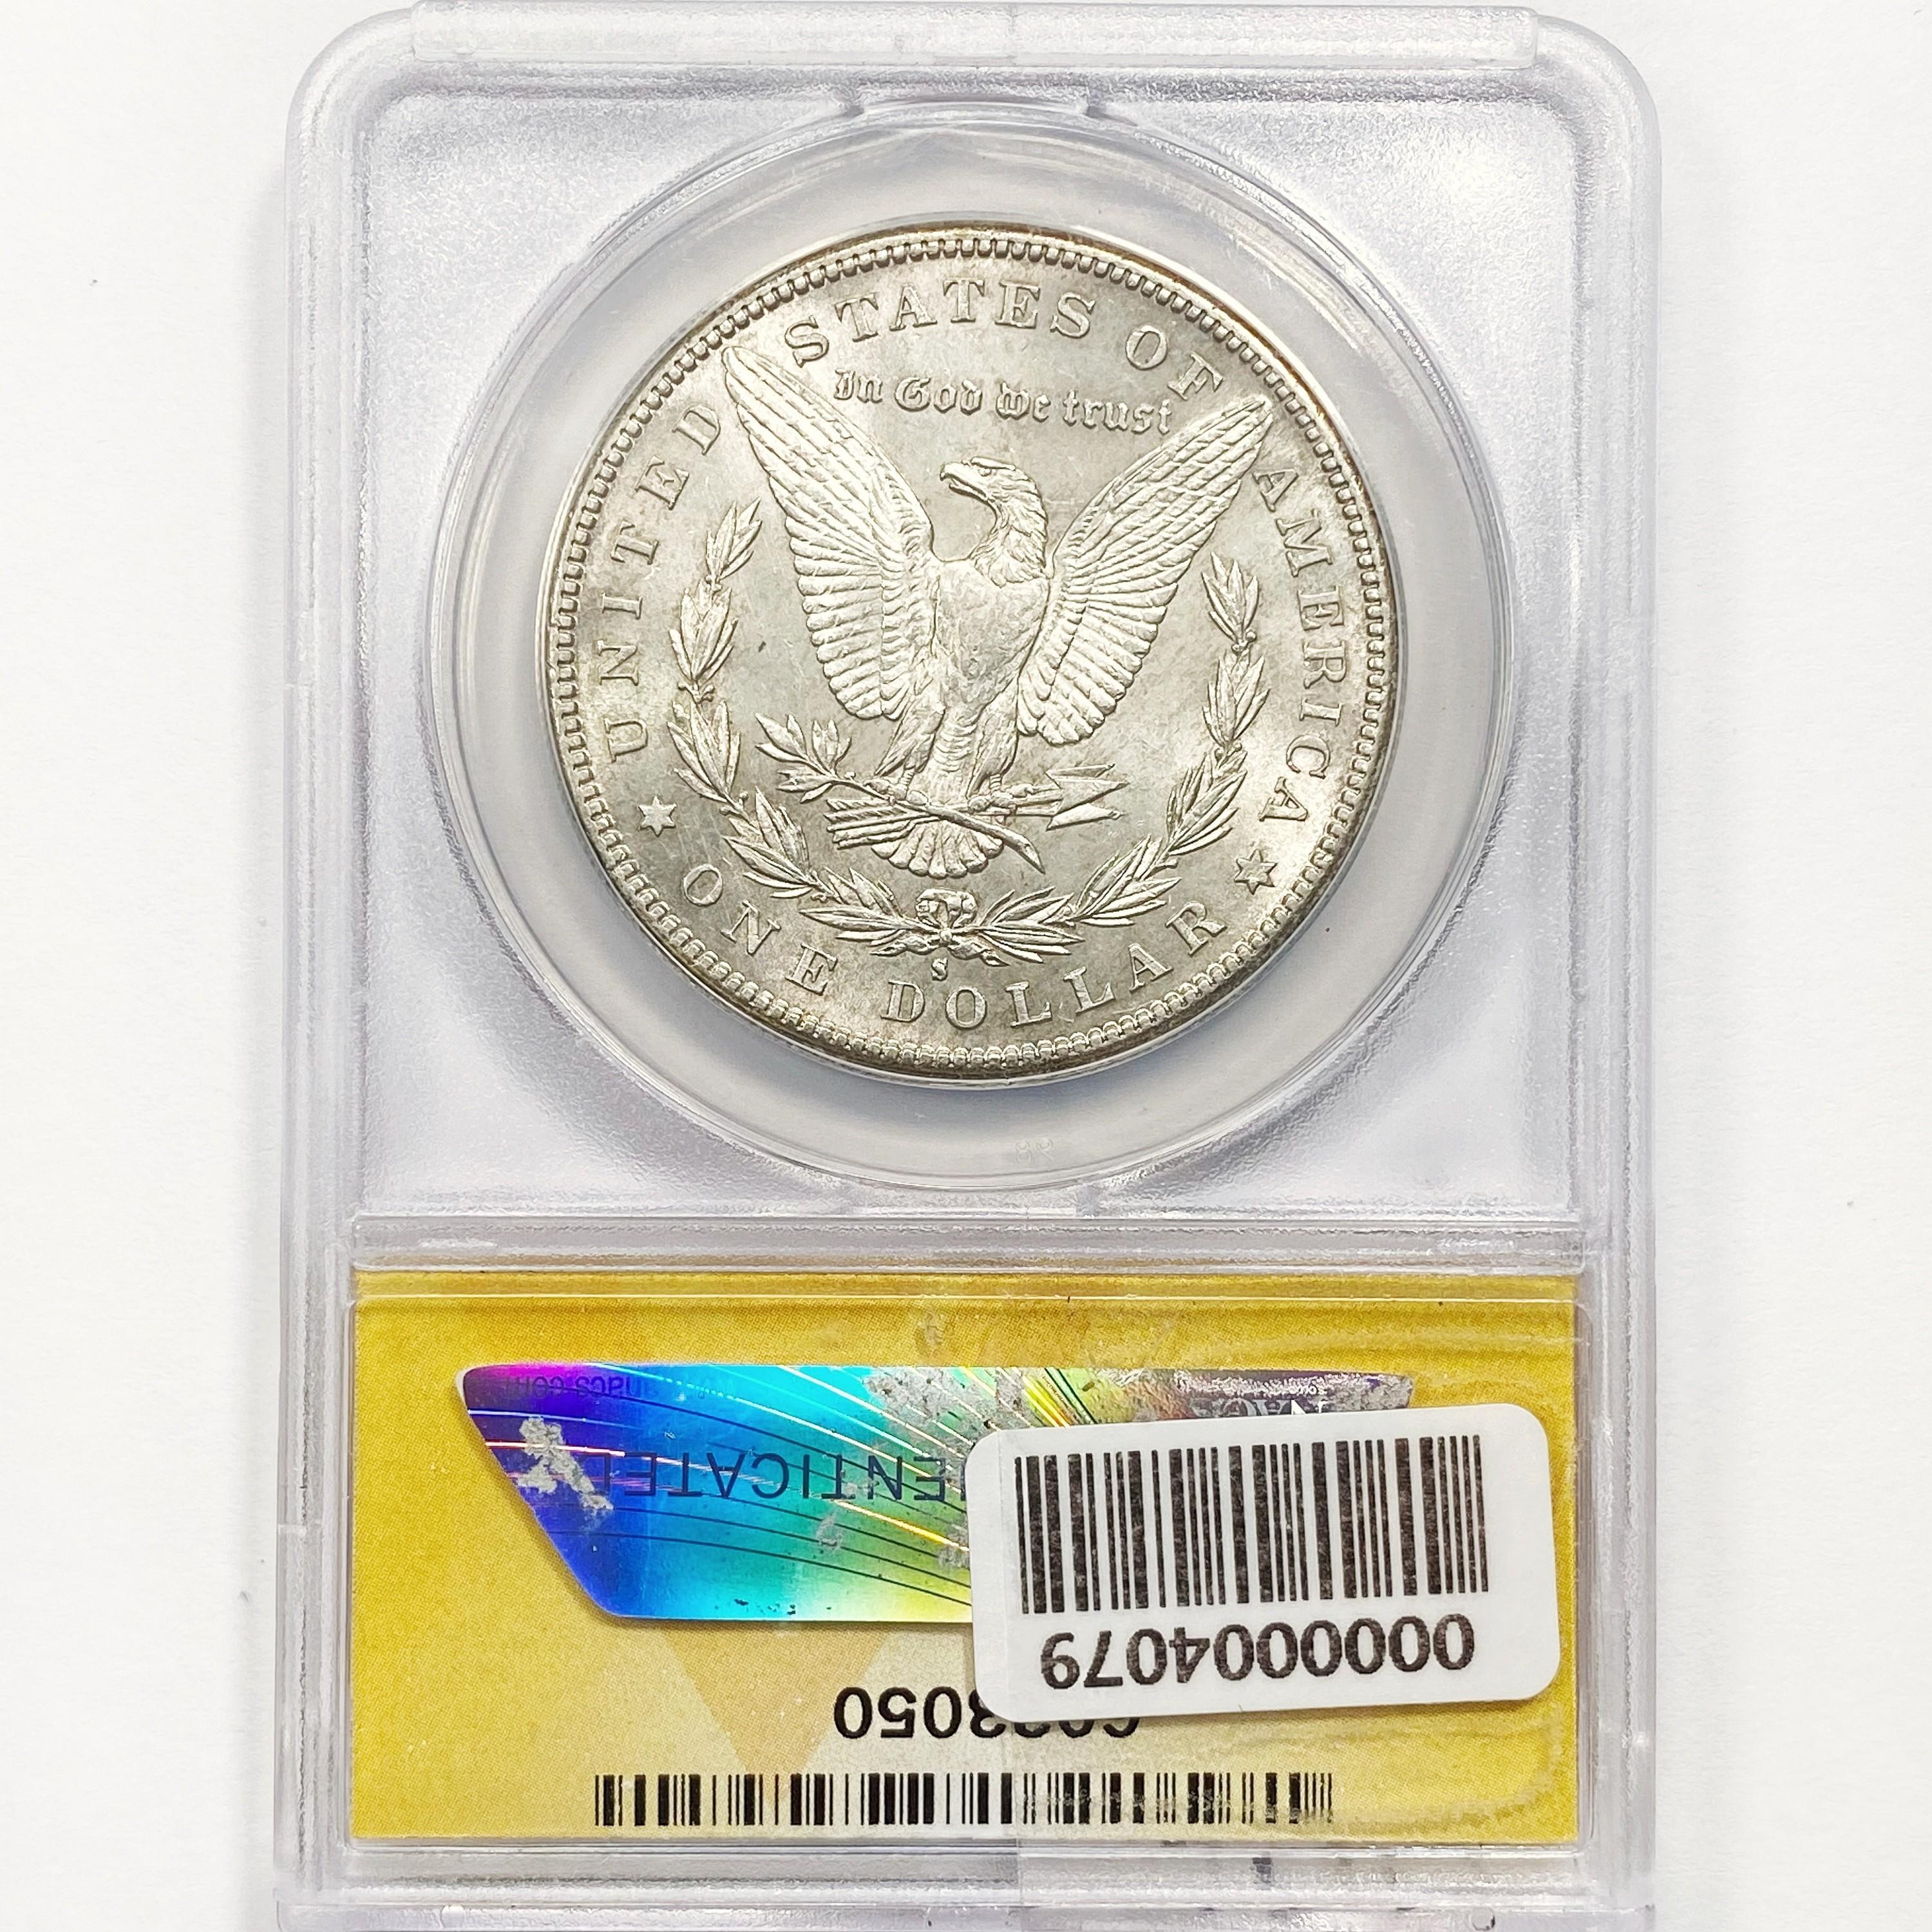 1886-S Morgan Silver Dollar ANACS MS61